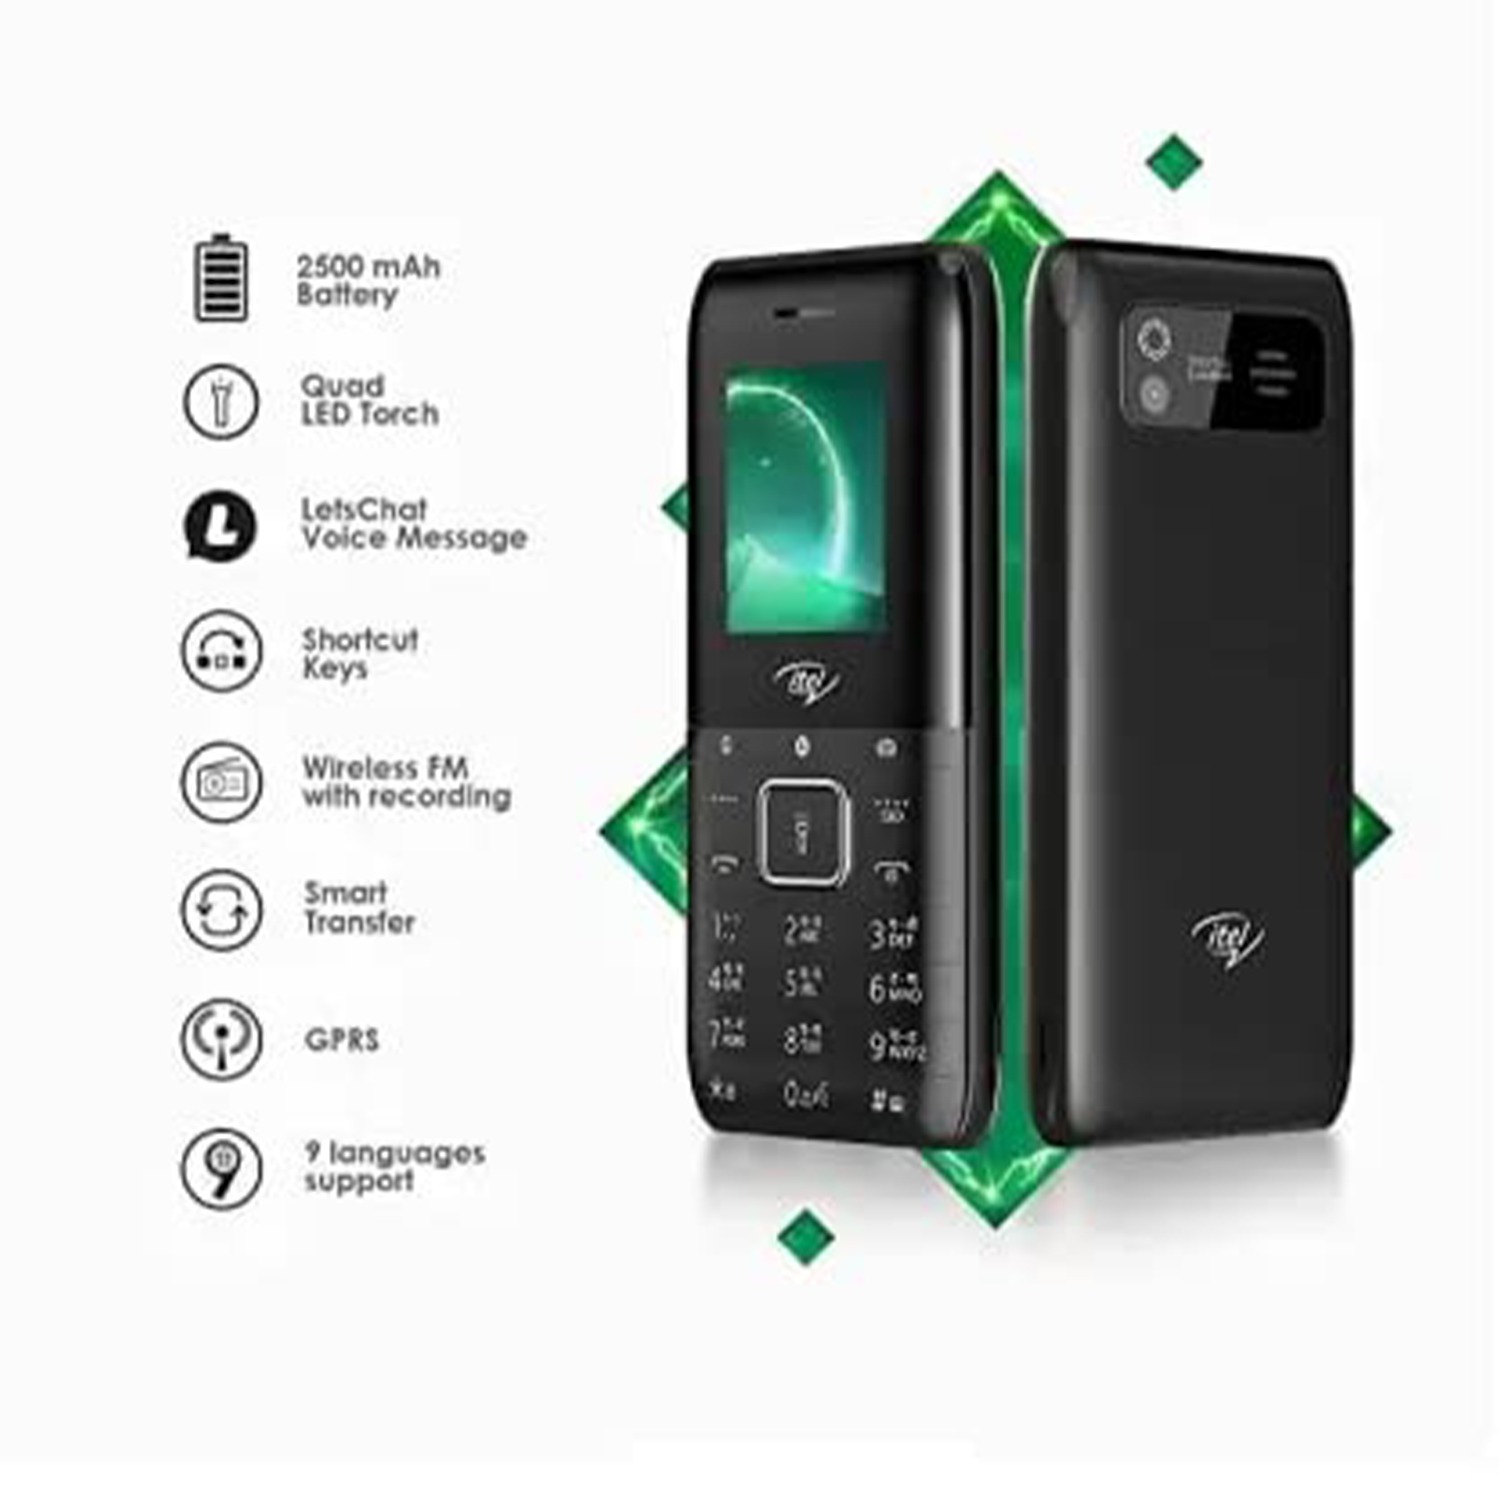 itel Power 200 | 1.8" Bright Screen KEYPAD Mobile With 2500mah Battery (Black)